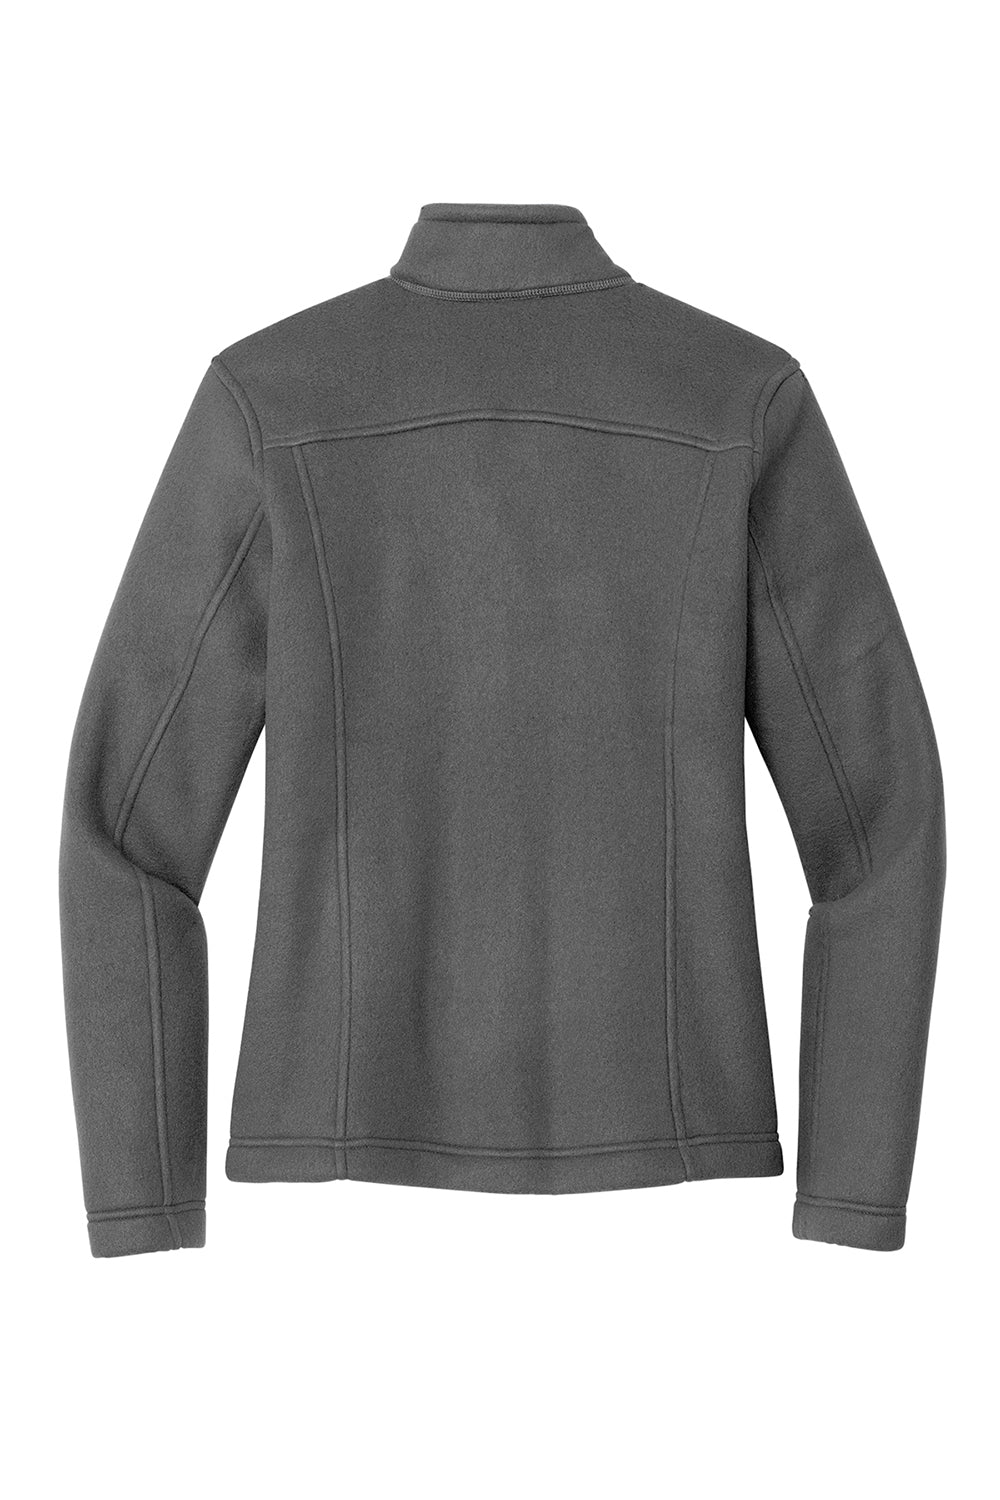 Eddie Bauer EB201 Womens Full Zip Fleece Jacket Steel Grey Flat Back